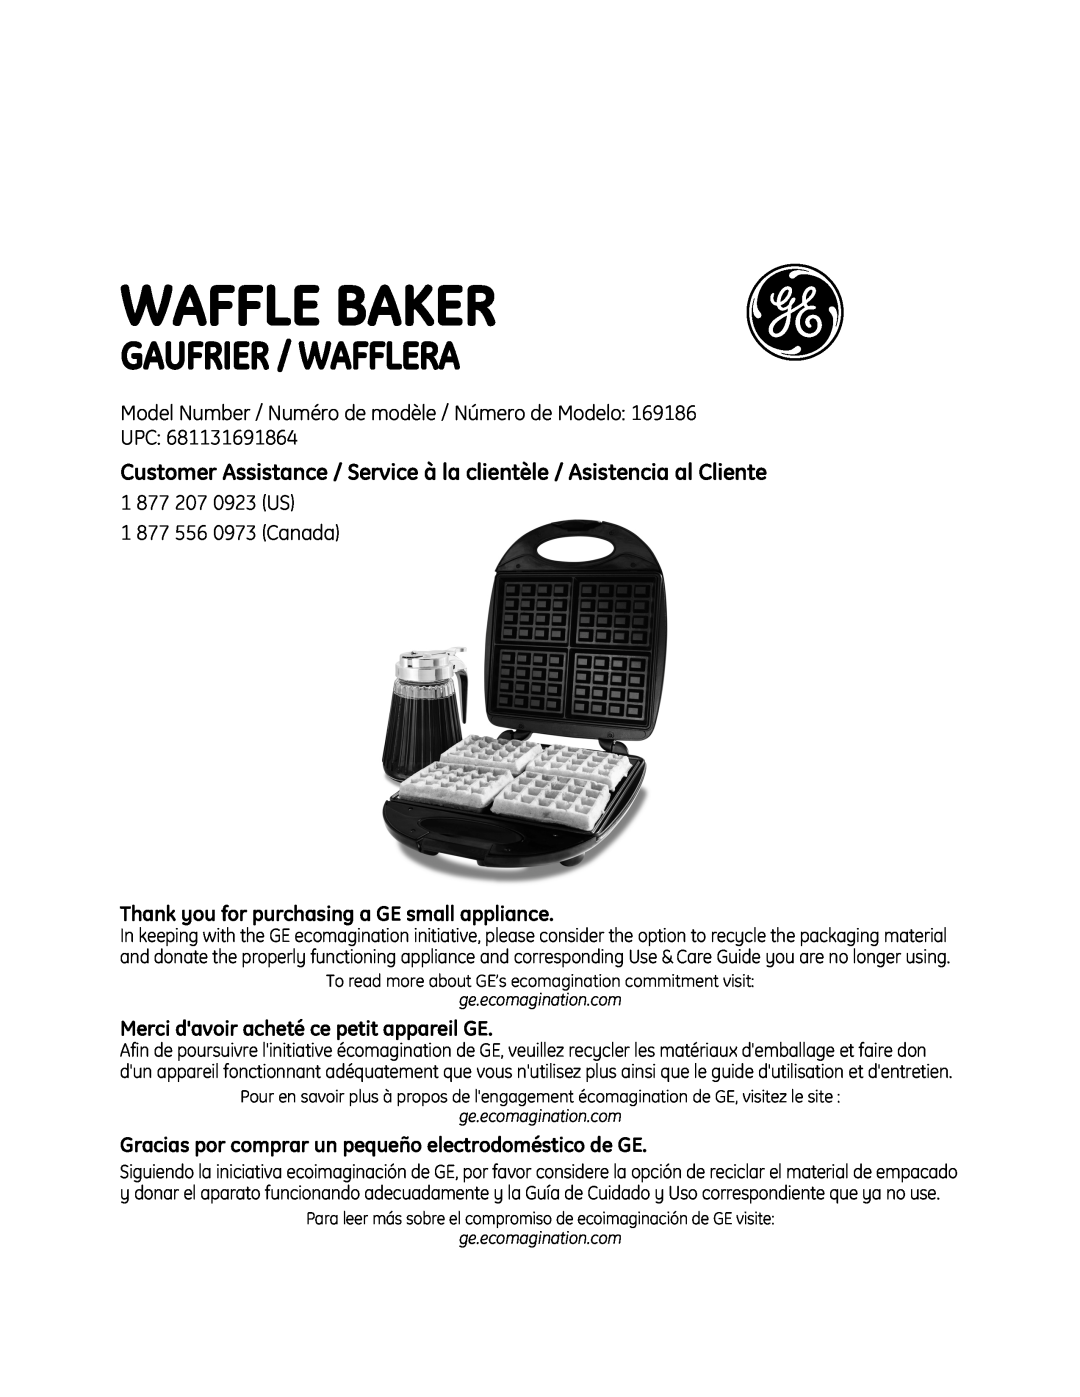 GE 681131691864 manual Waffle Baker, Gaufrier / Wafflera, Upc, 1 877 207 0923 US 1 877 556 0973 Canada 